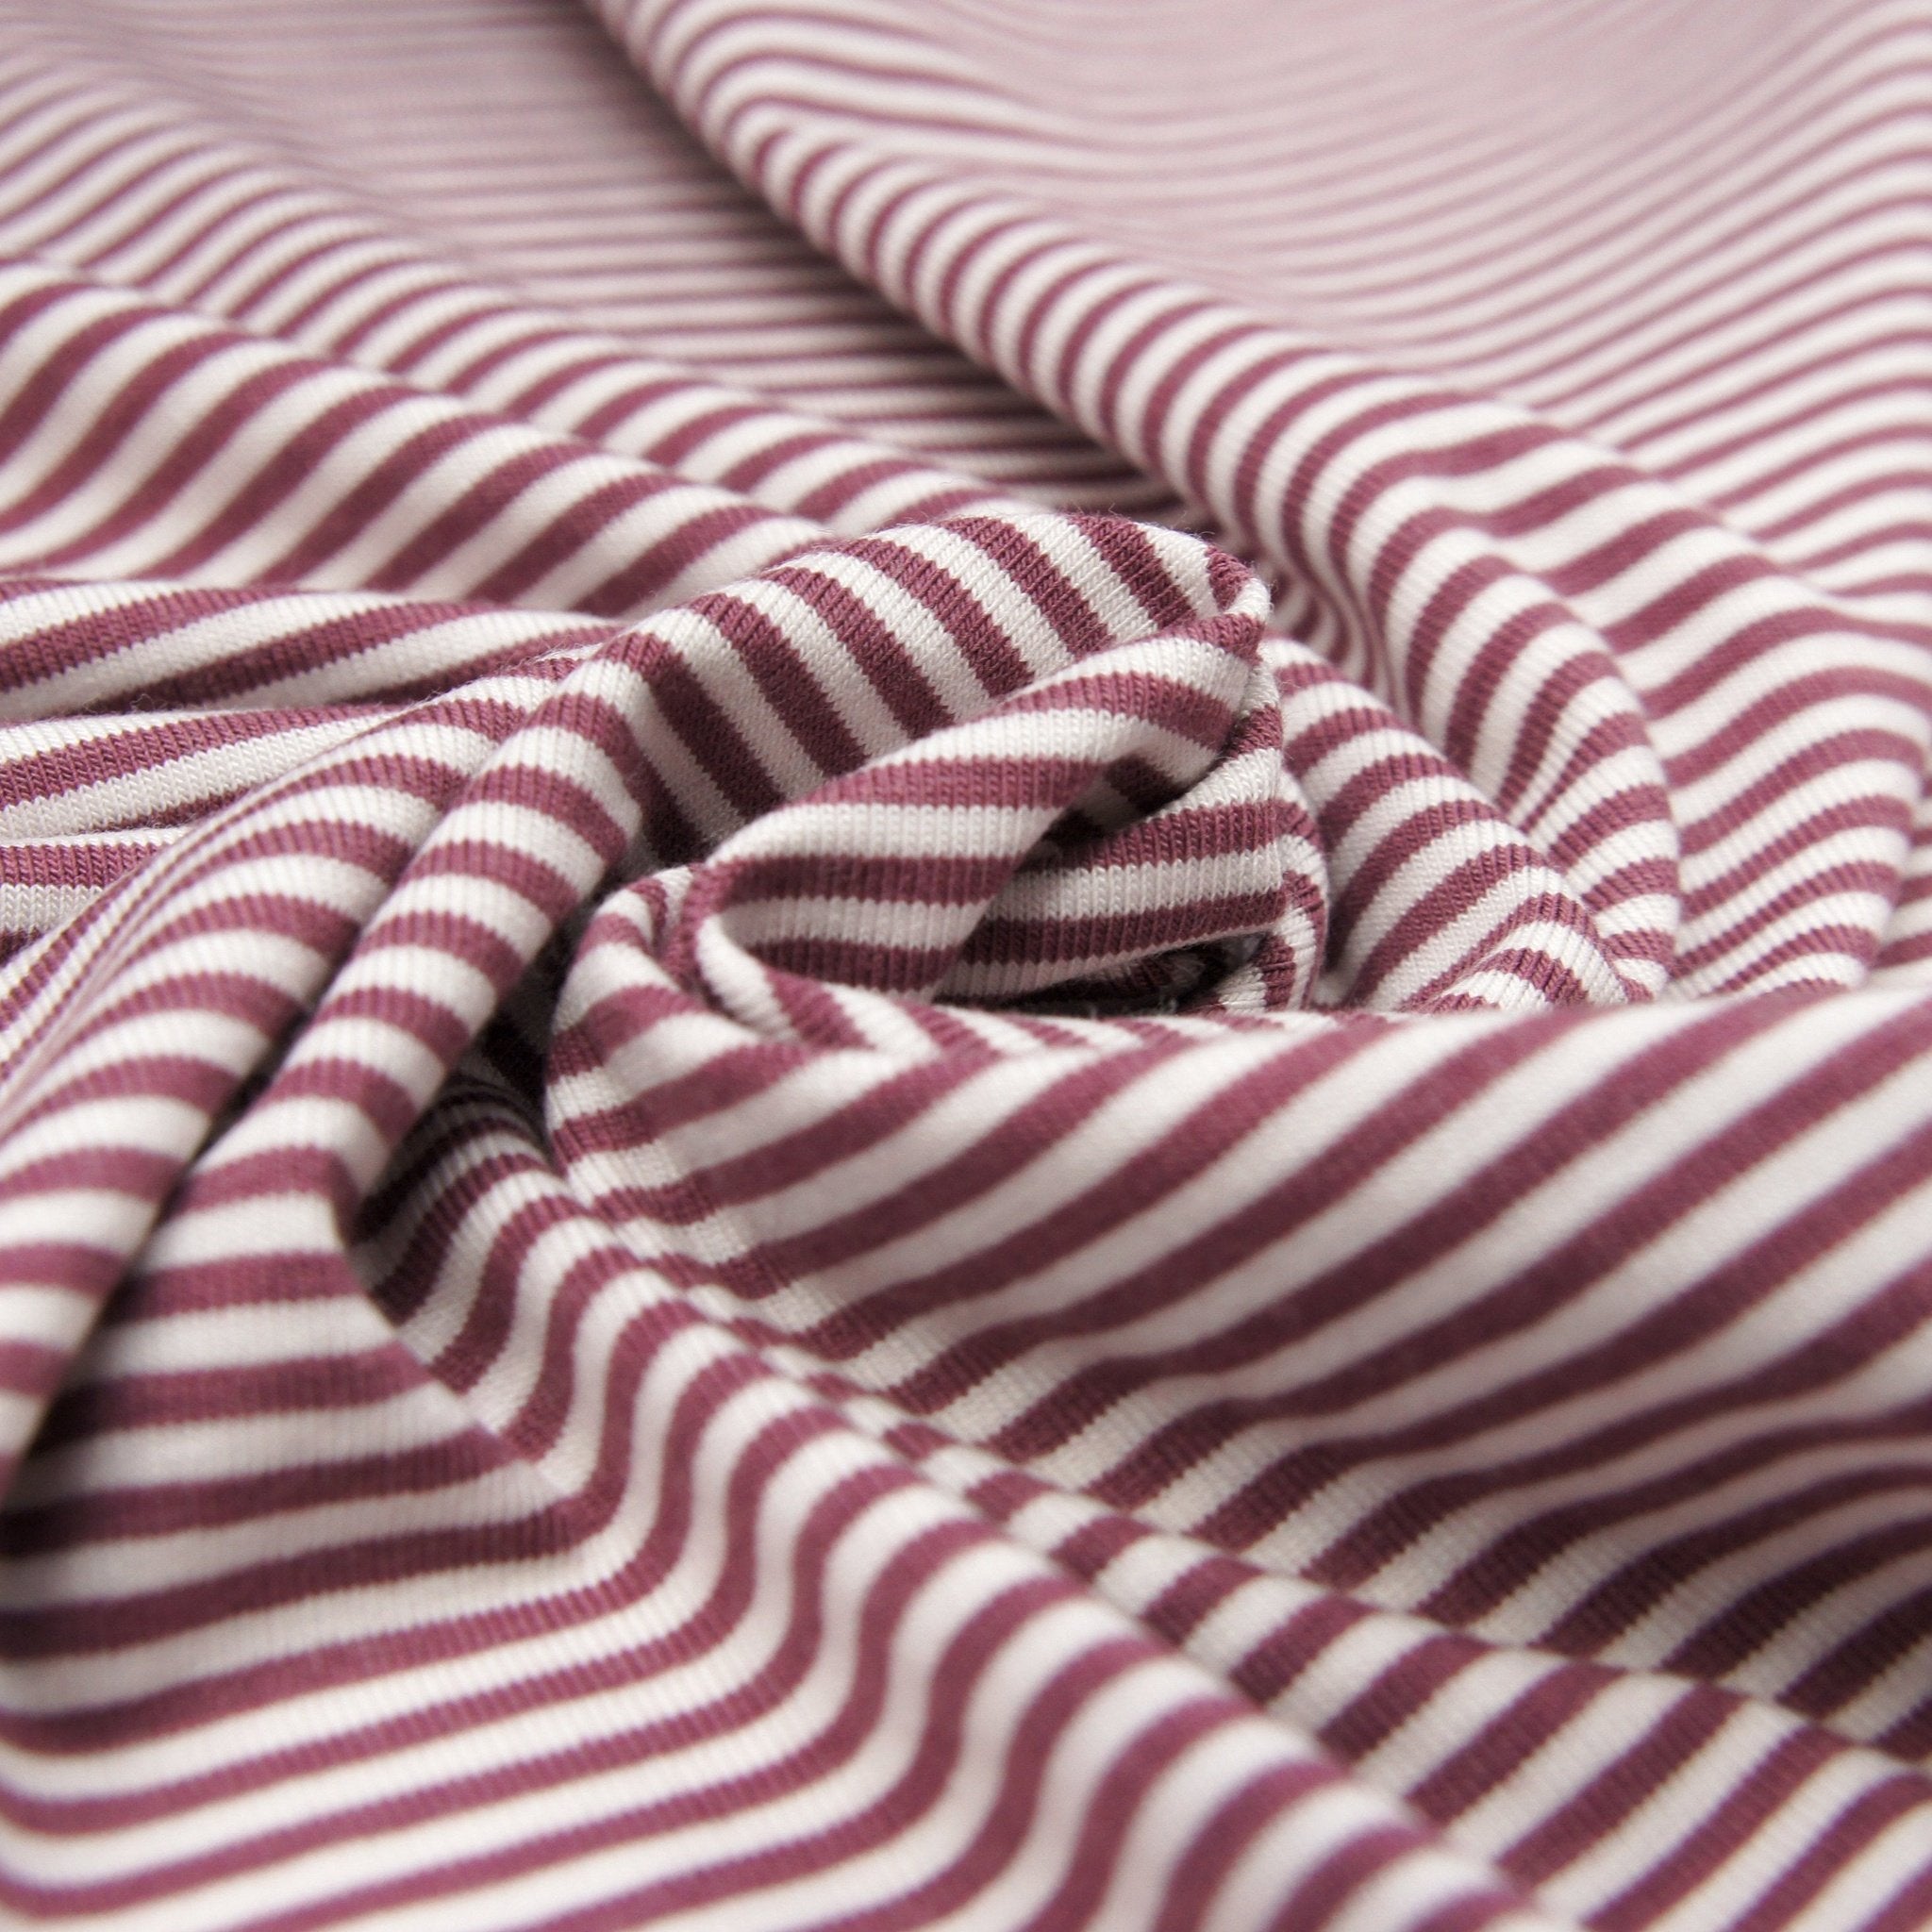 Bamboo Organic Cotton Spandex Jersey - Rose Brown White 2mm Stripes - Knit - Earth Indigo